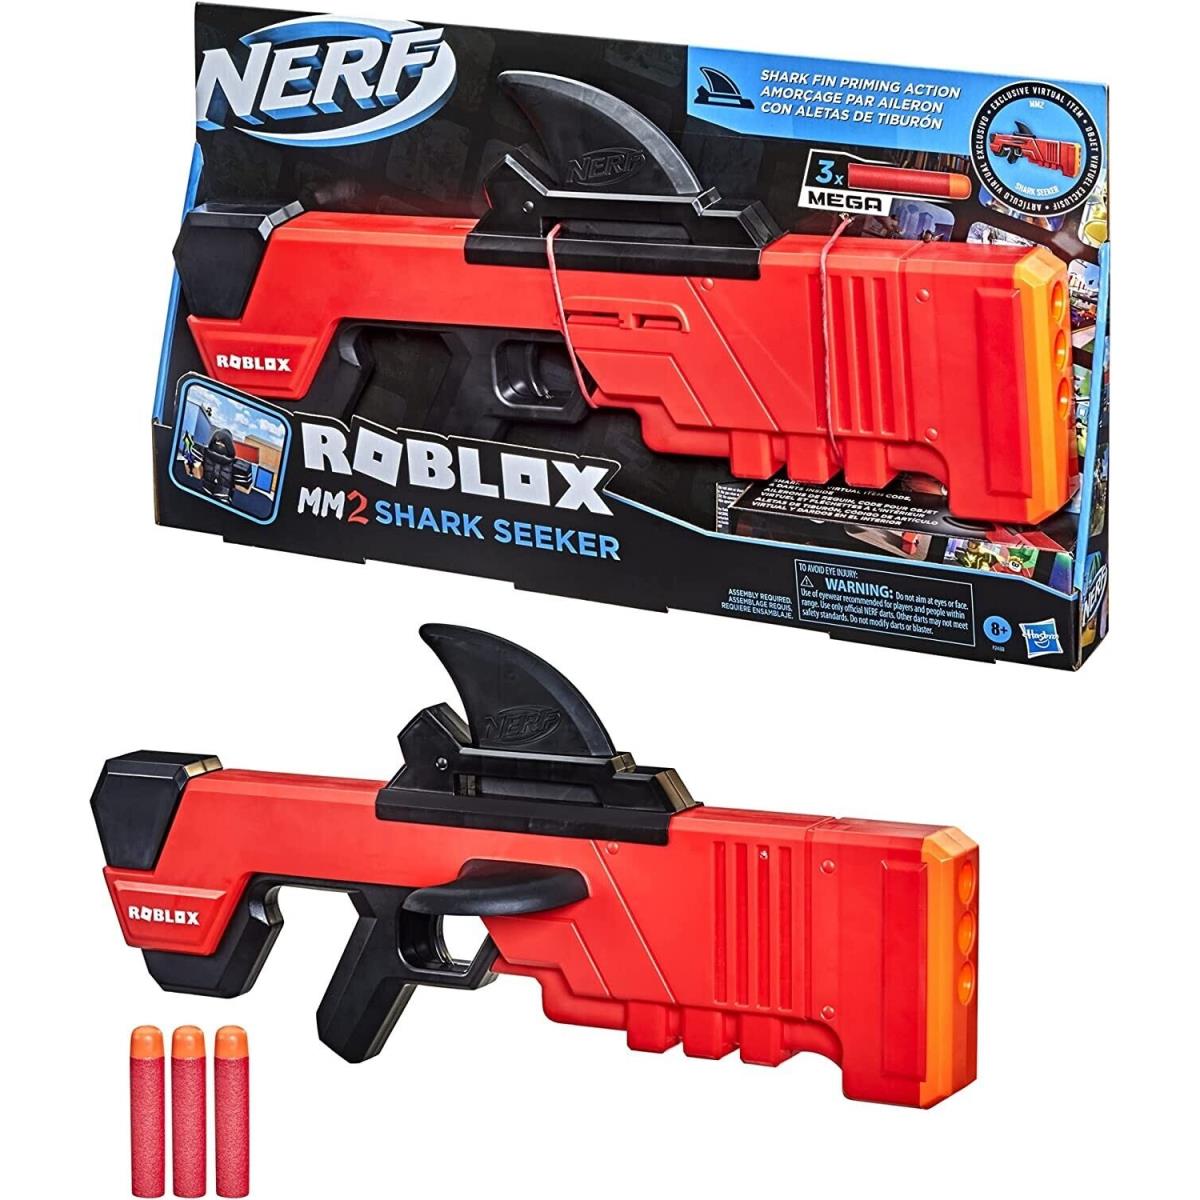 Nerf Roblox MM2 Shark Seeker Dart Blaster Shark-fin Priming Virtual Item Toys